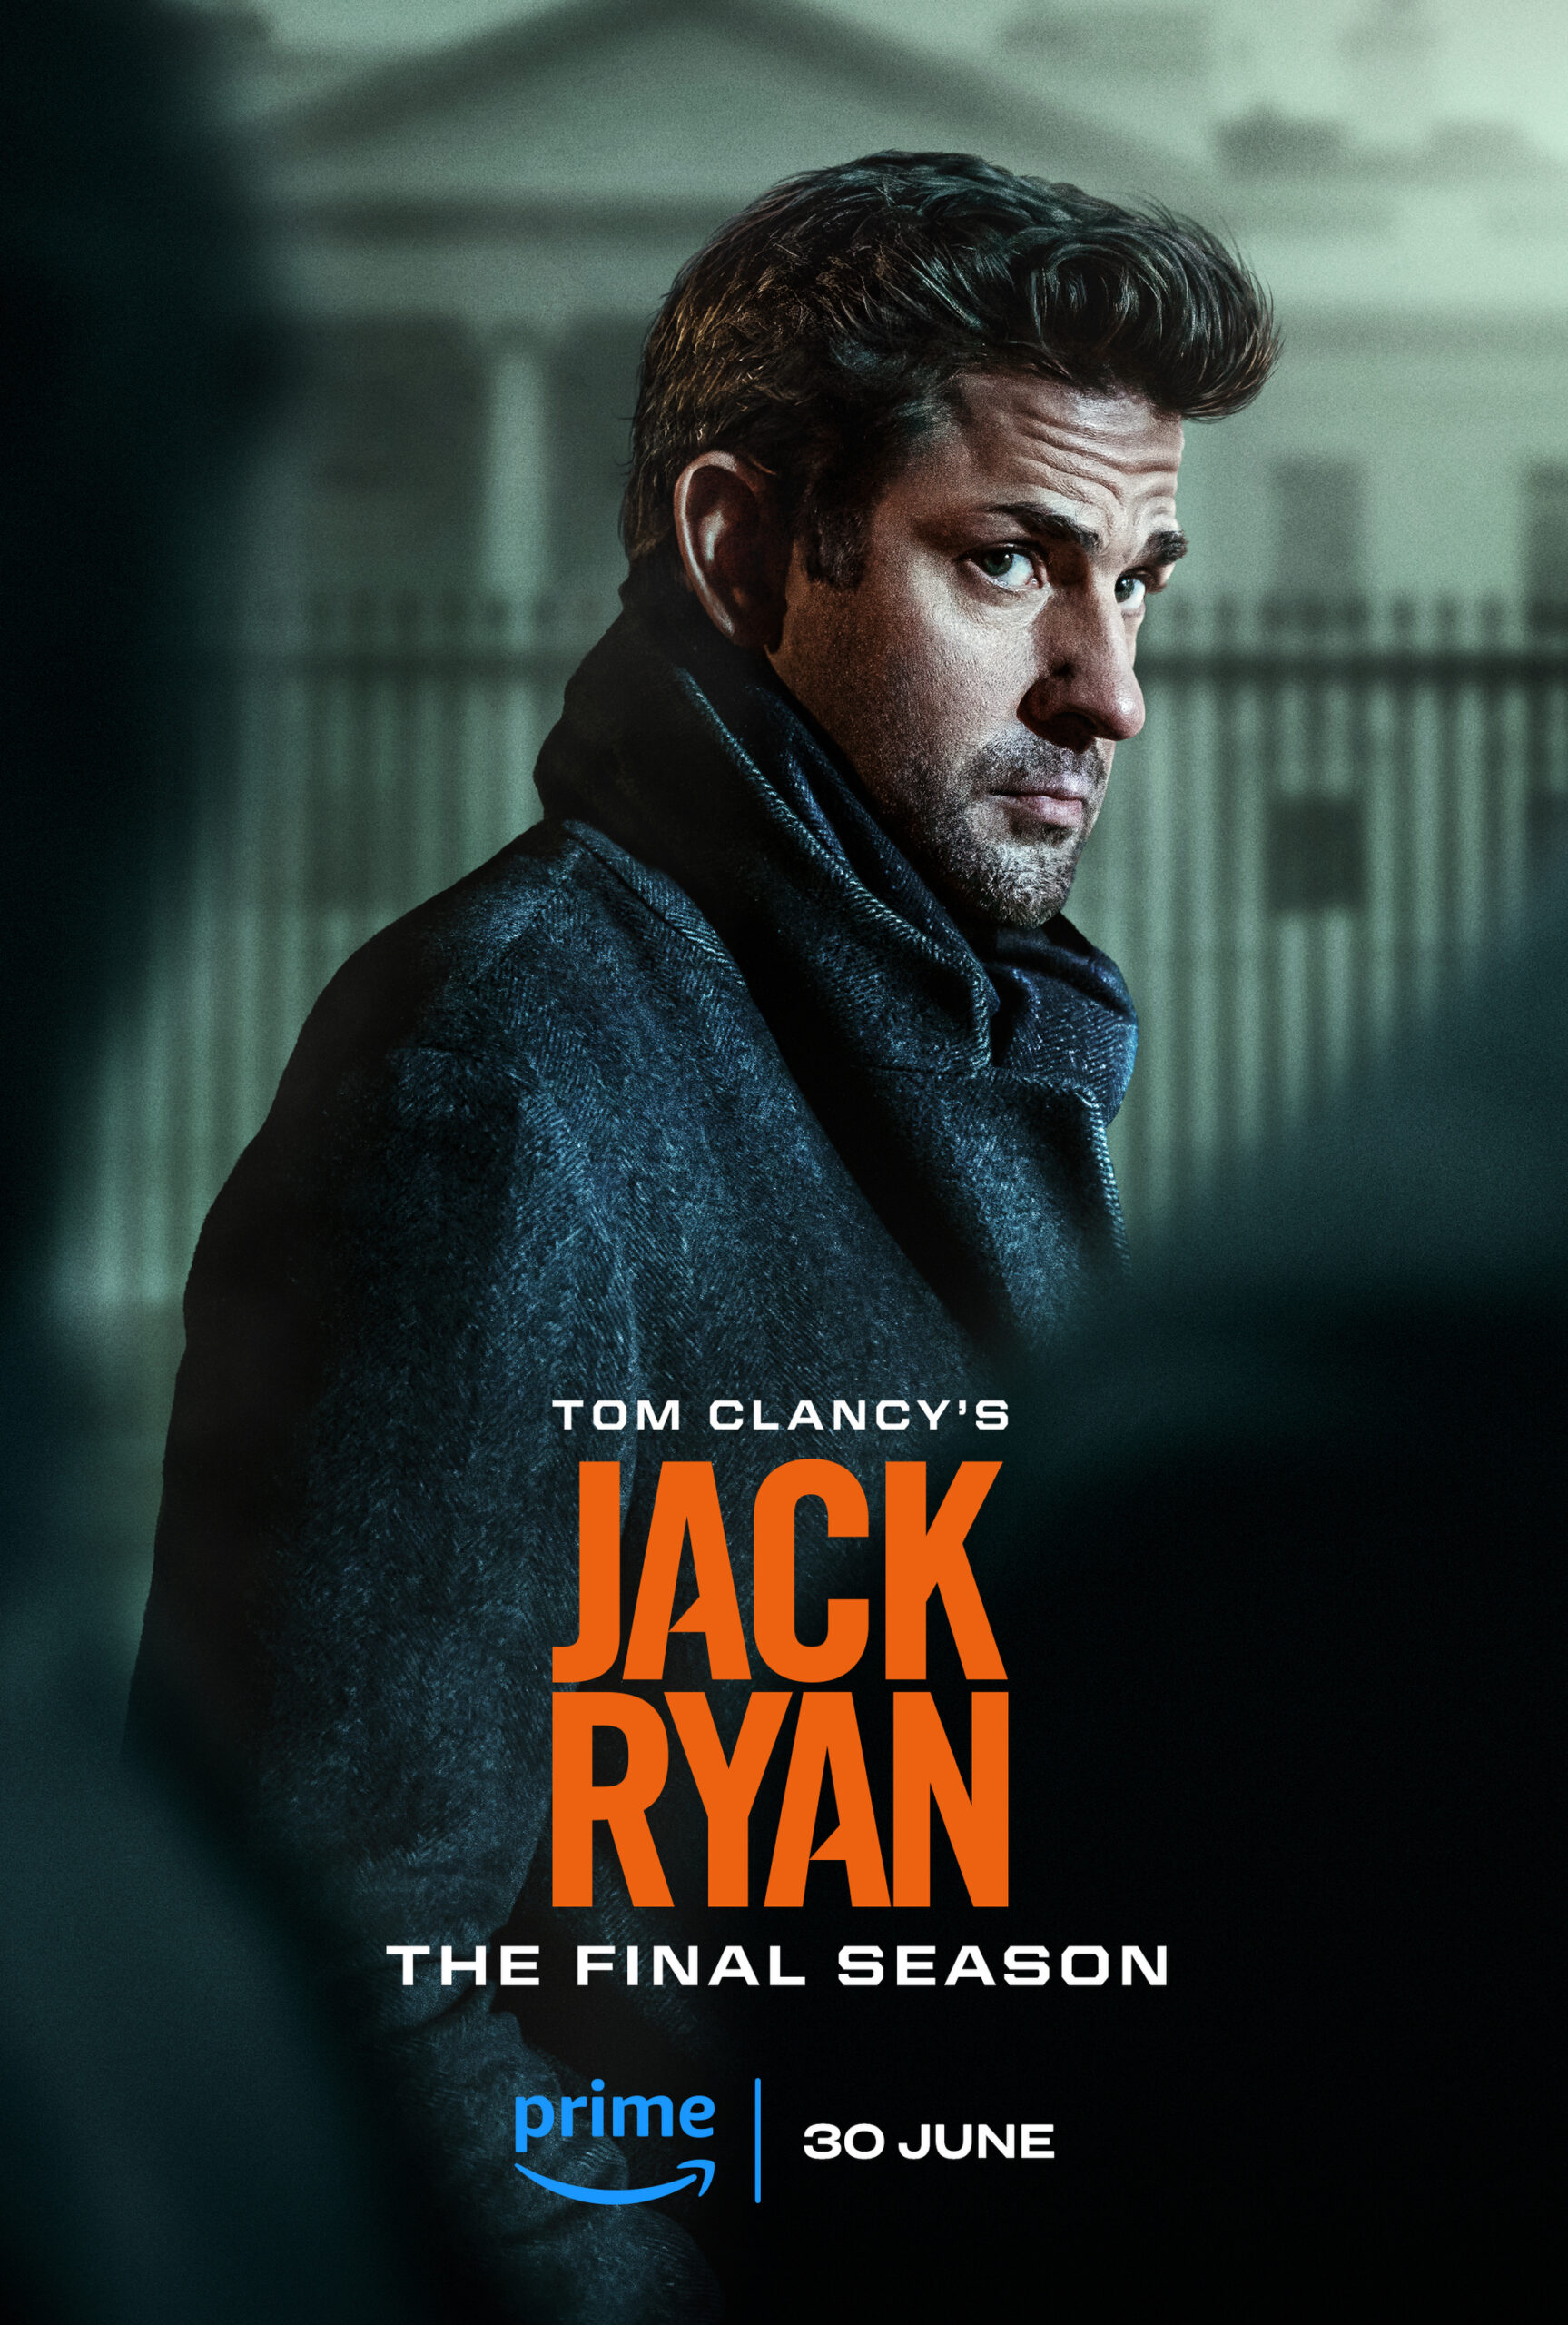 Tom Clancy's Jack Ryan The Final Season poster (Prime Video)